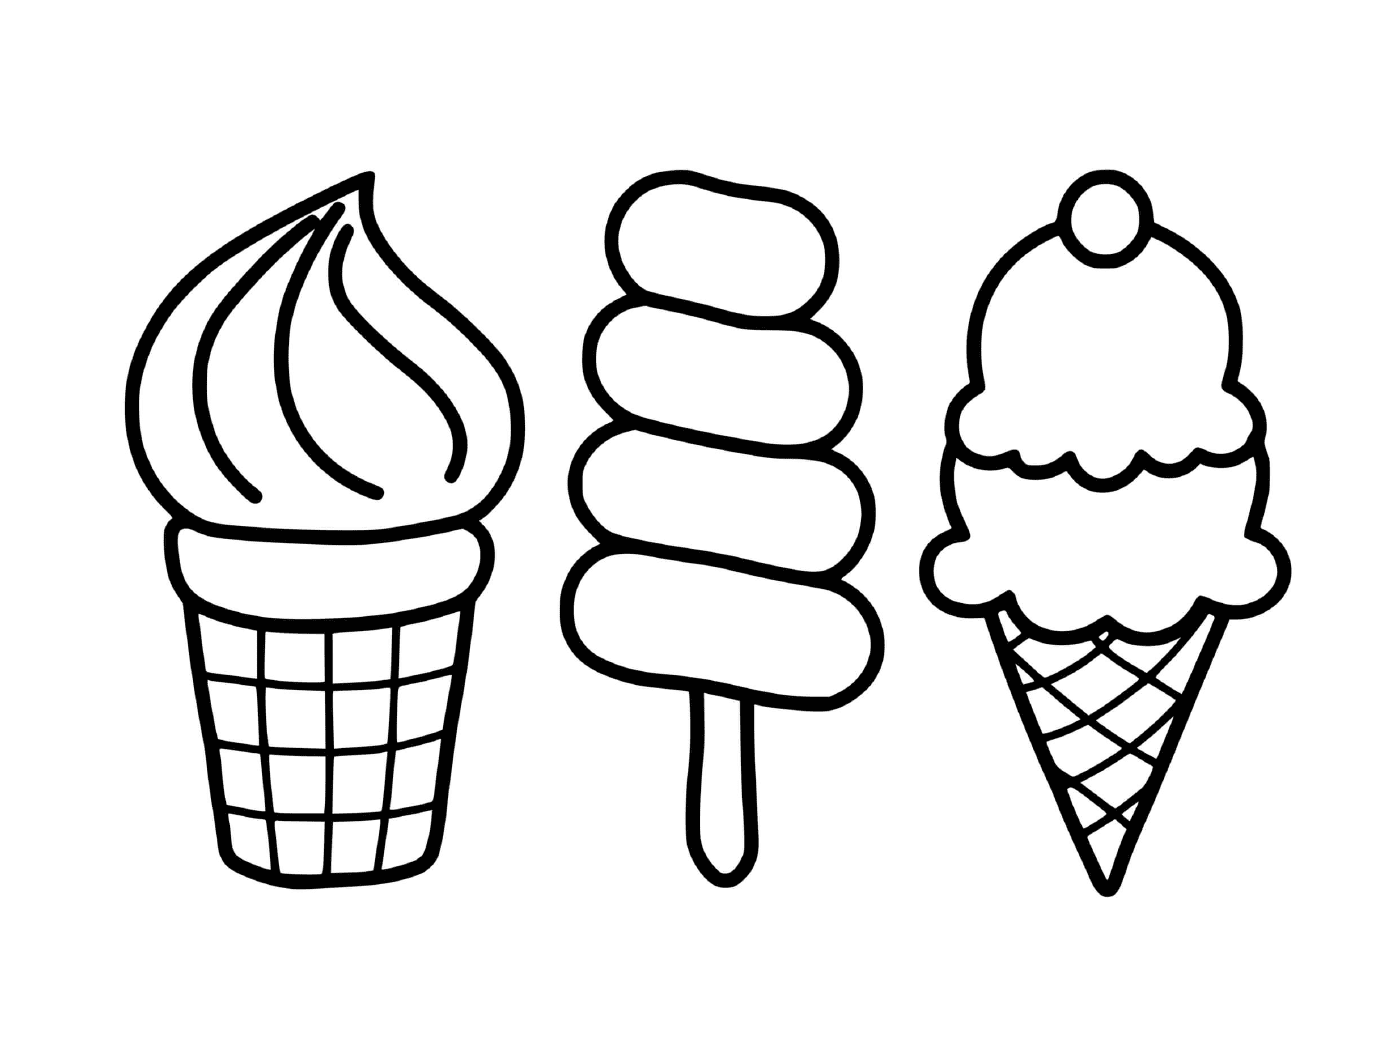  Three flavours of children's ice cream 